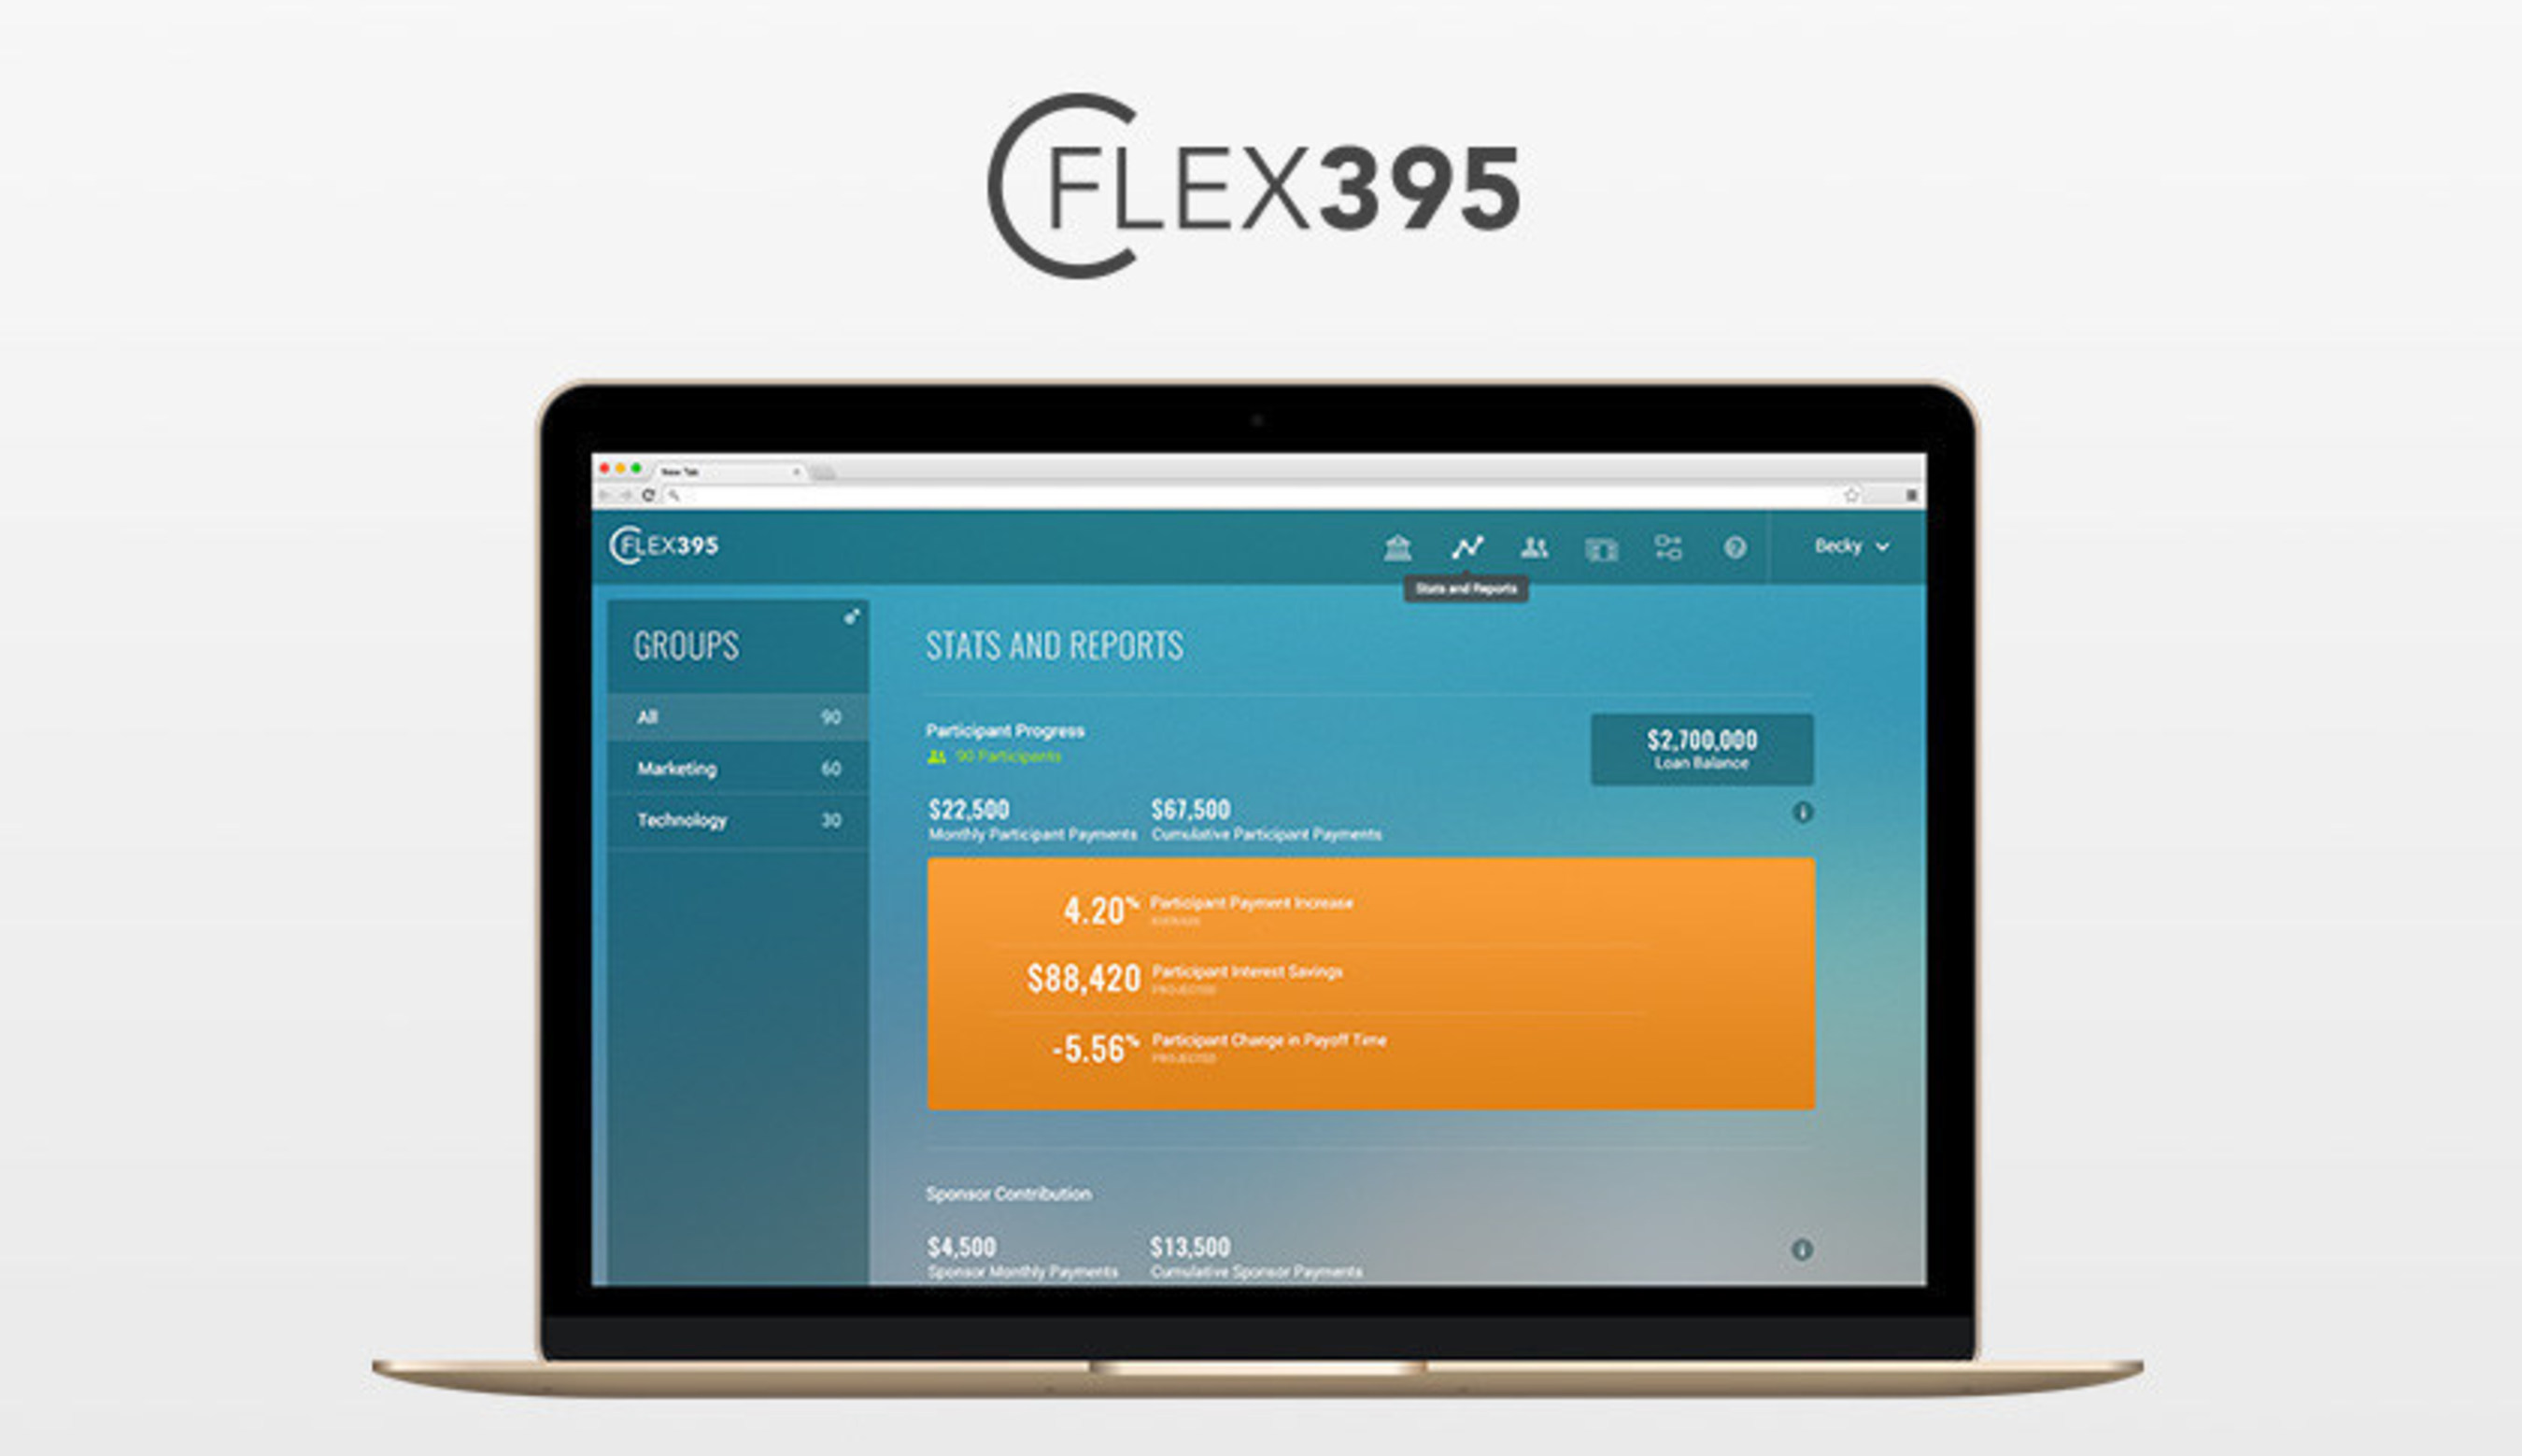 The Flex395 Dashboard